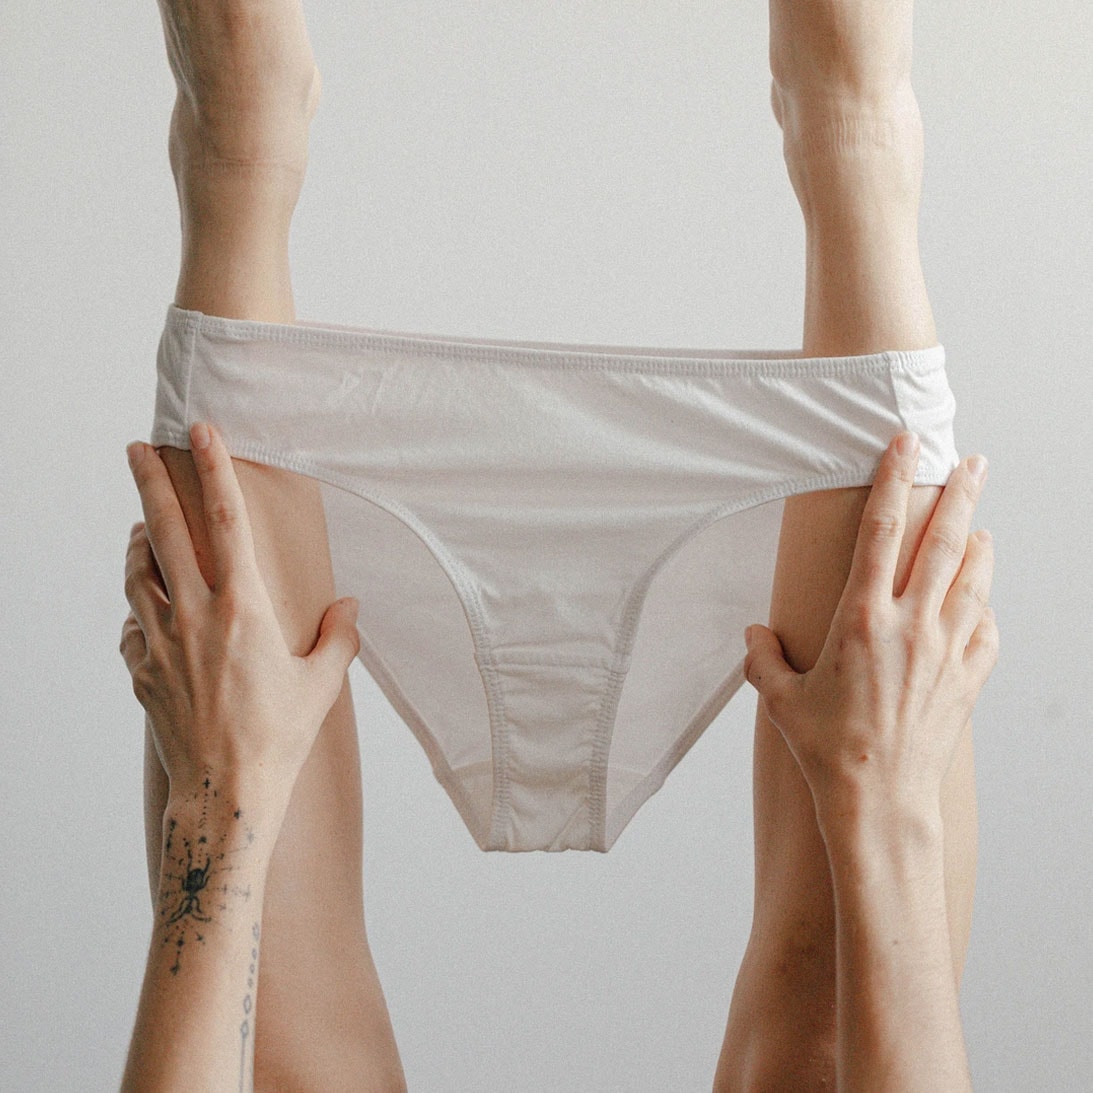 kent compostable underwear sustainability panties legs hands